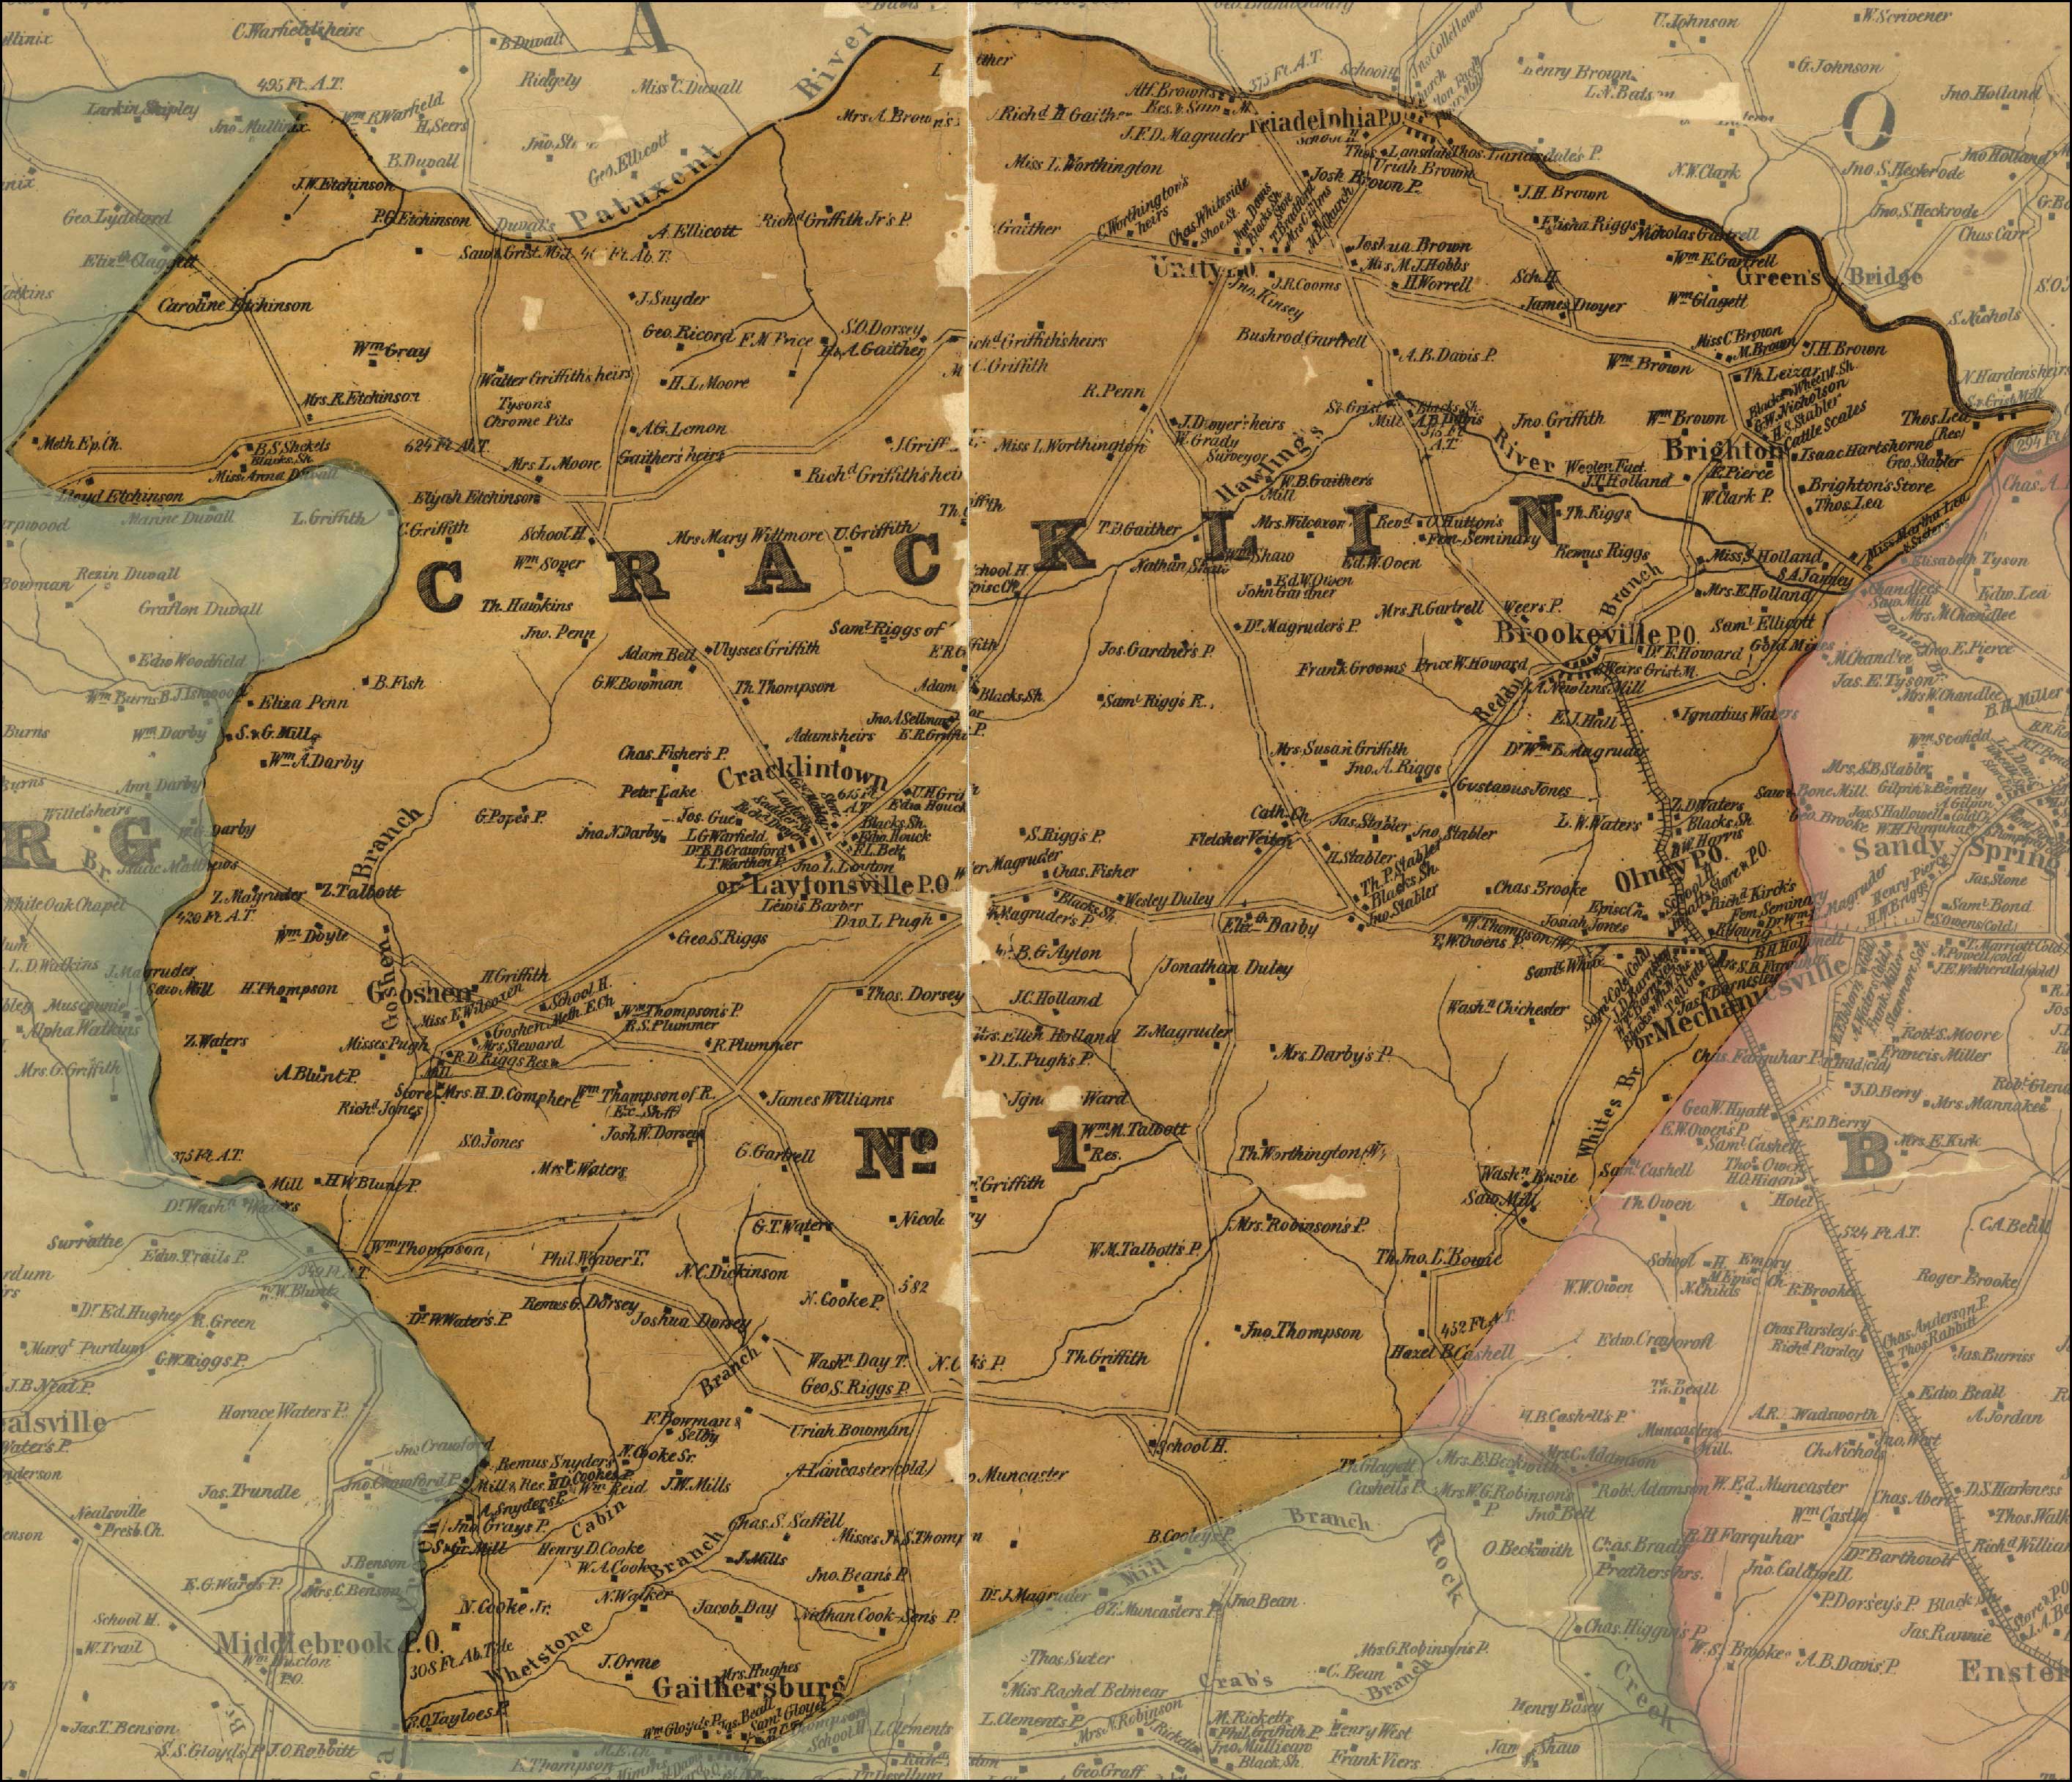 Simon J. Martenet, Martenet and Bond's Map of Montgomery County, 1865, Library of Congress,
               MSA SC 1213-1-464